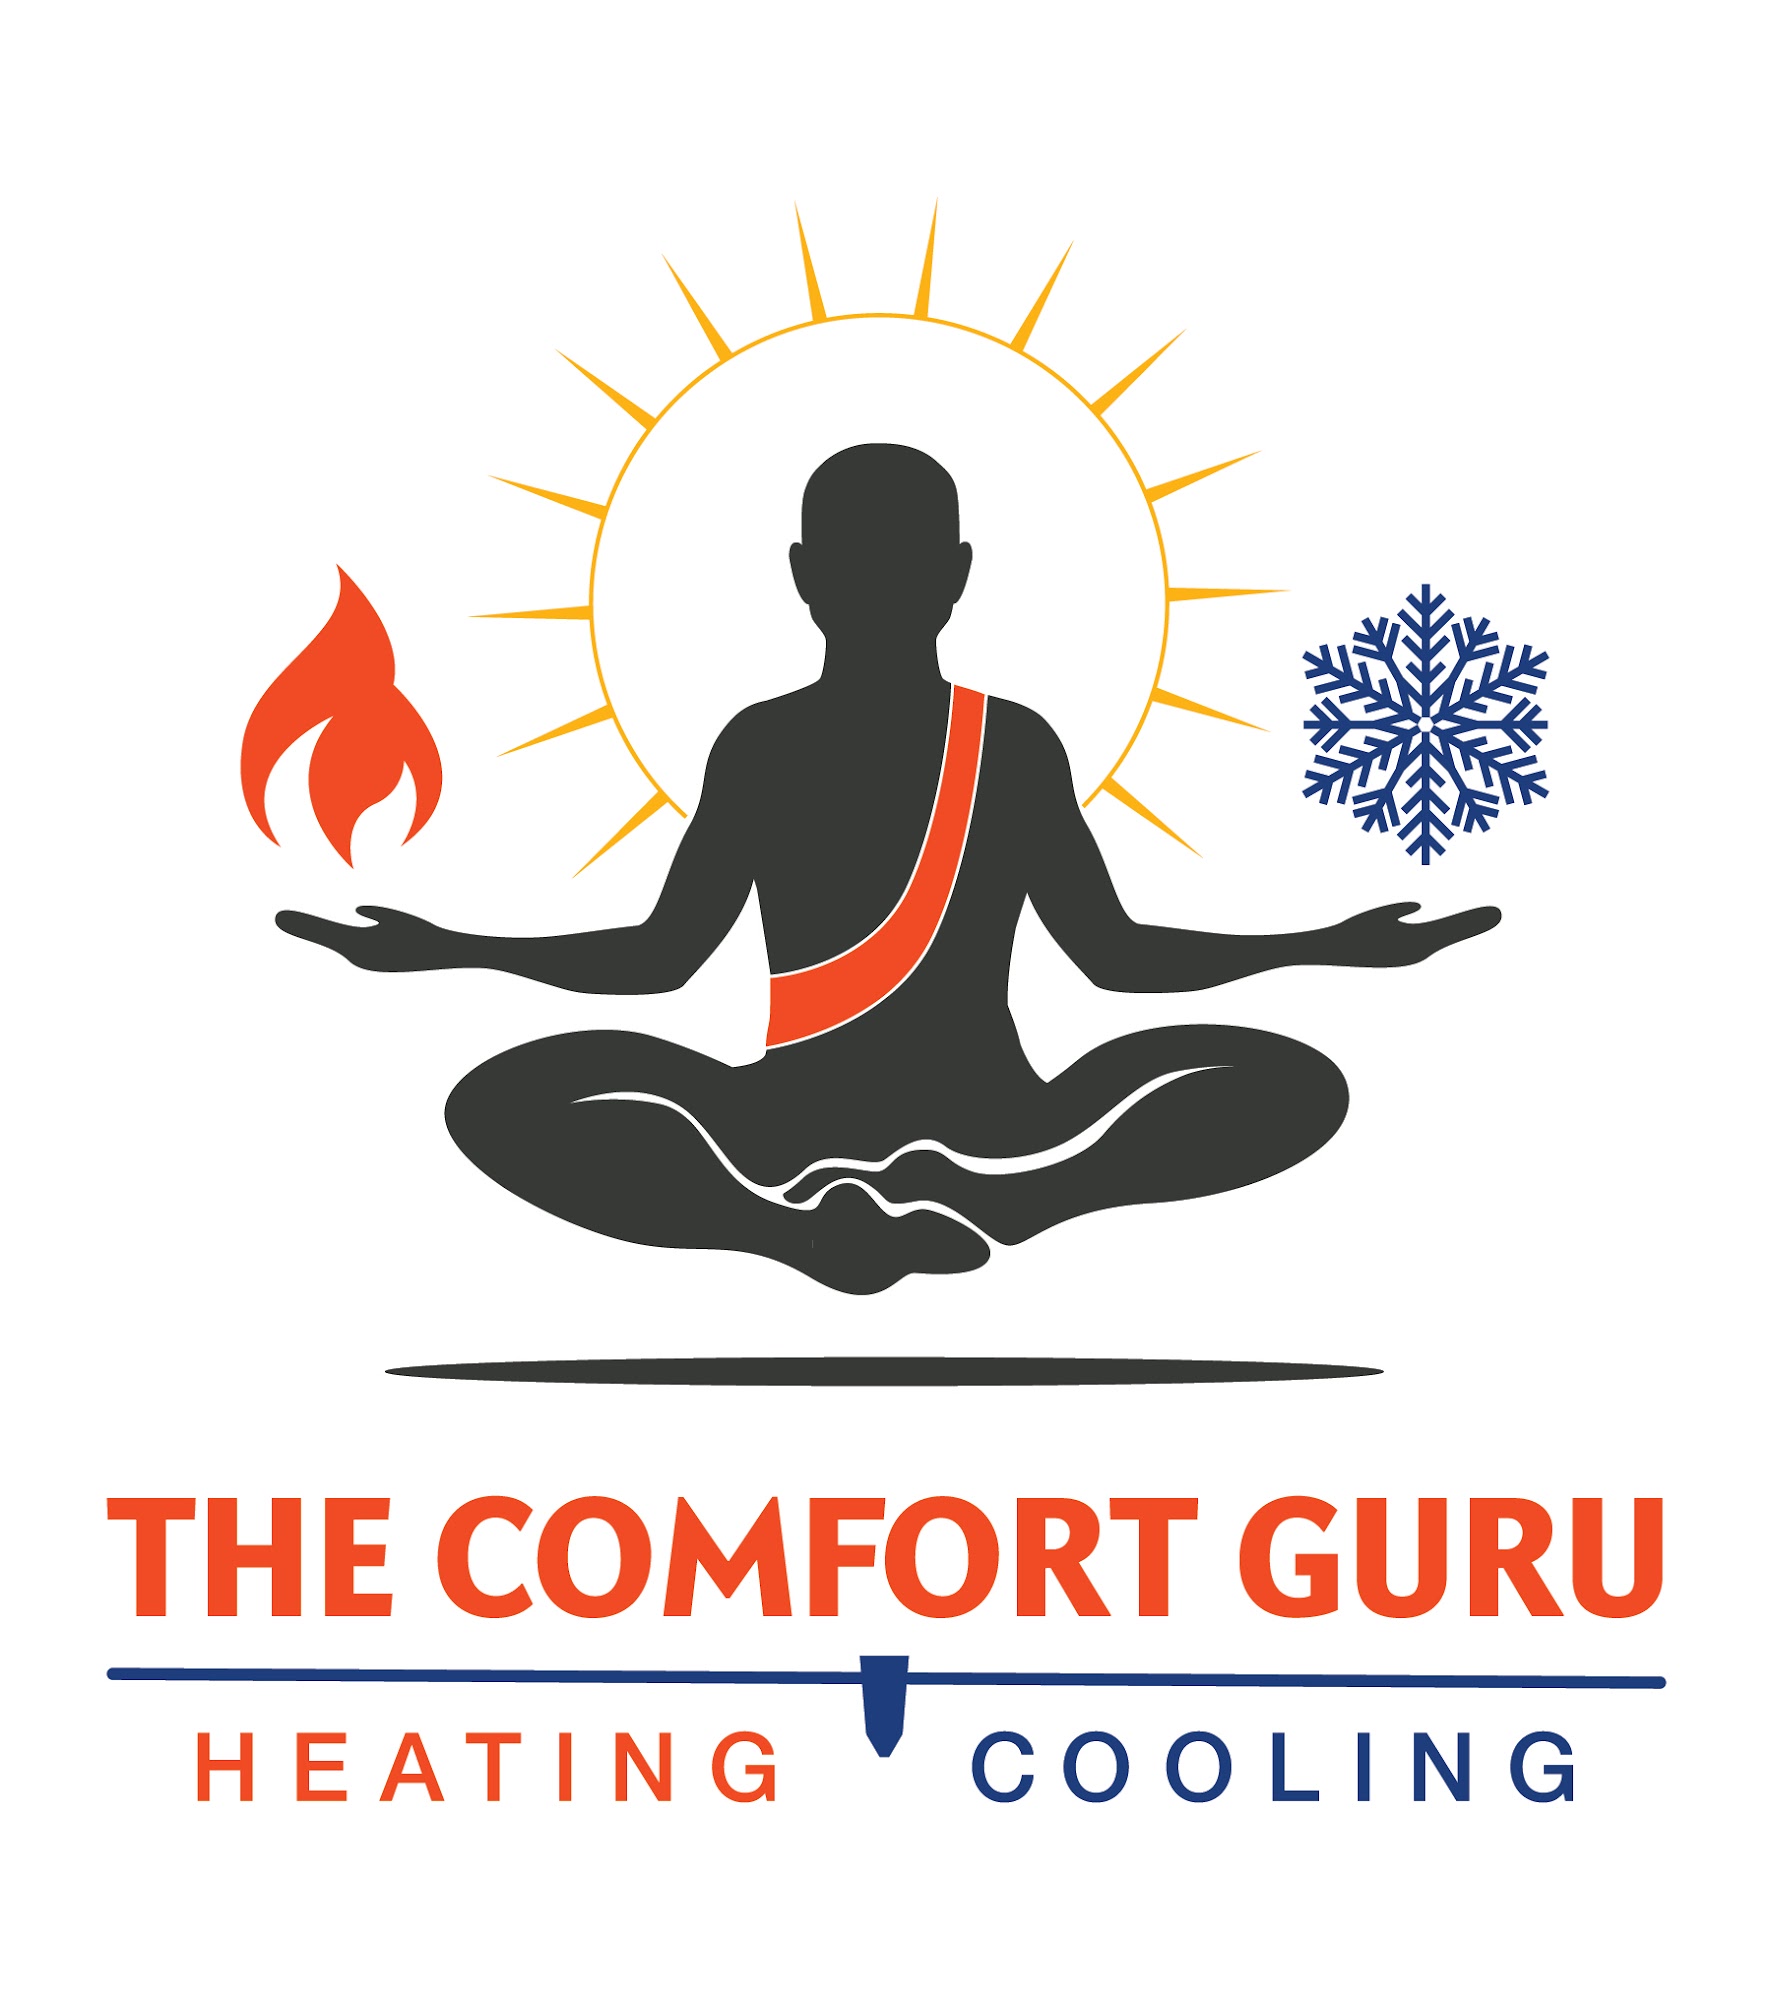 The Comfort Guru Heating and Cooling